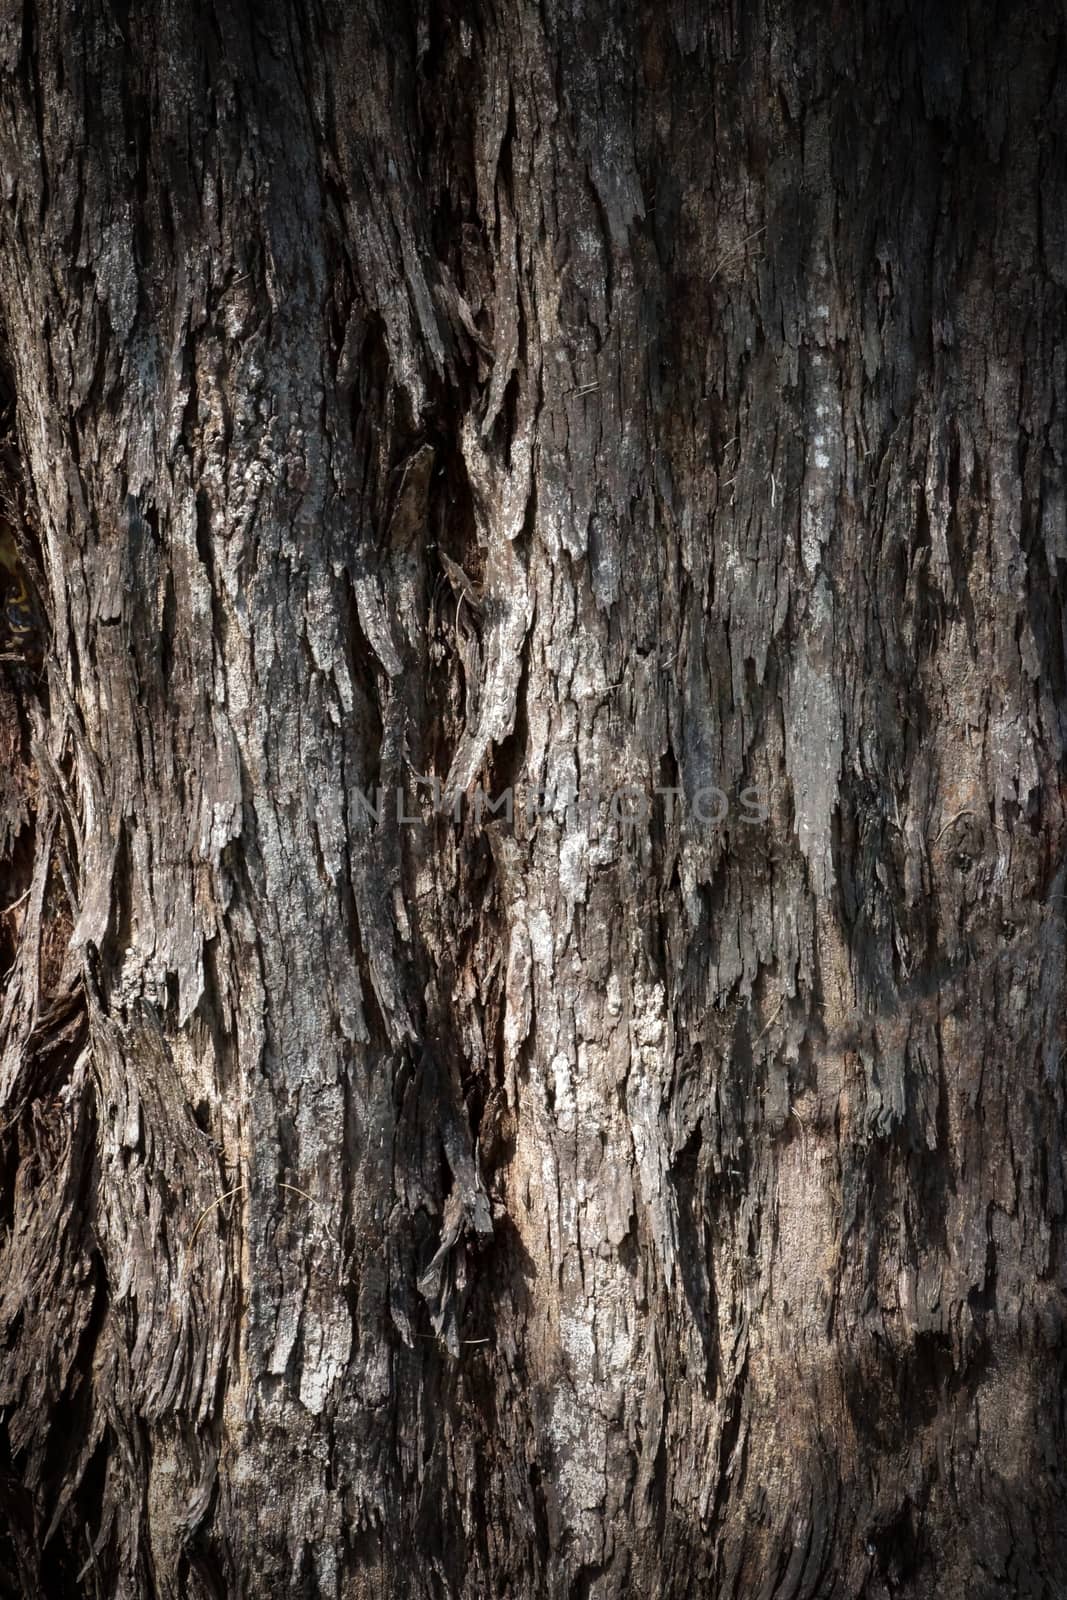 Bark of Pine Tree by Noppharat_th